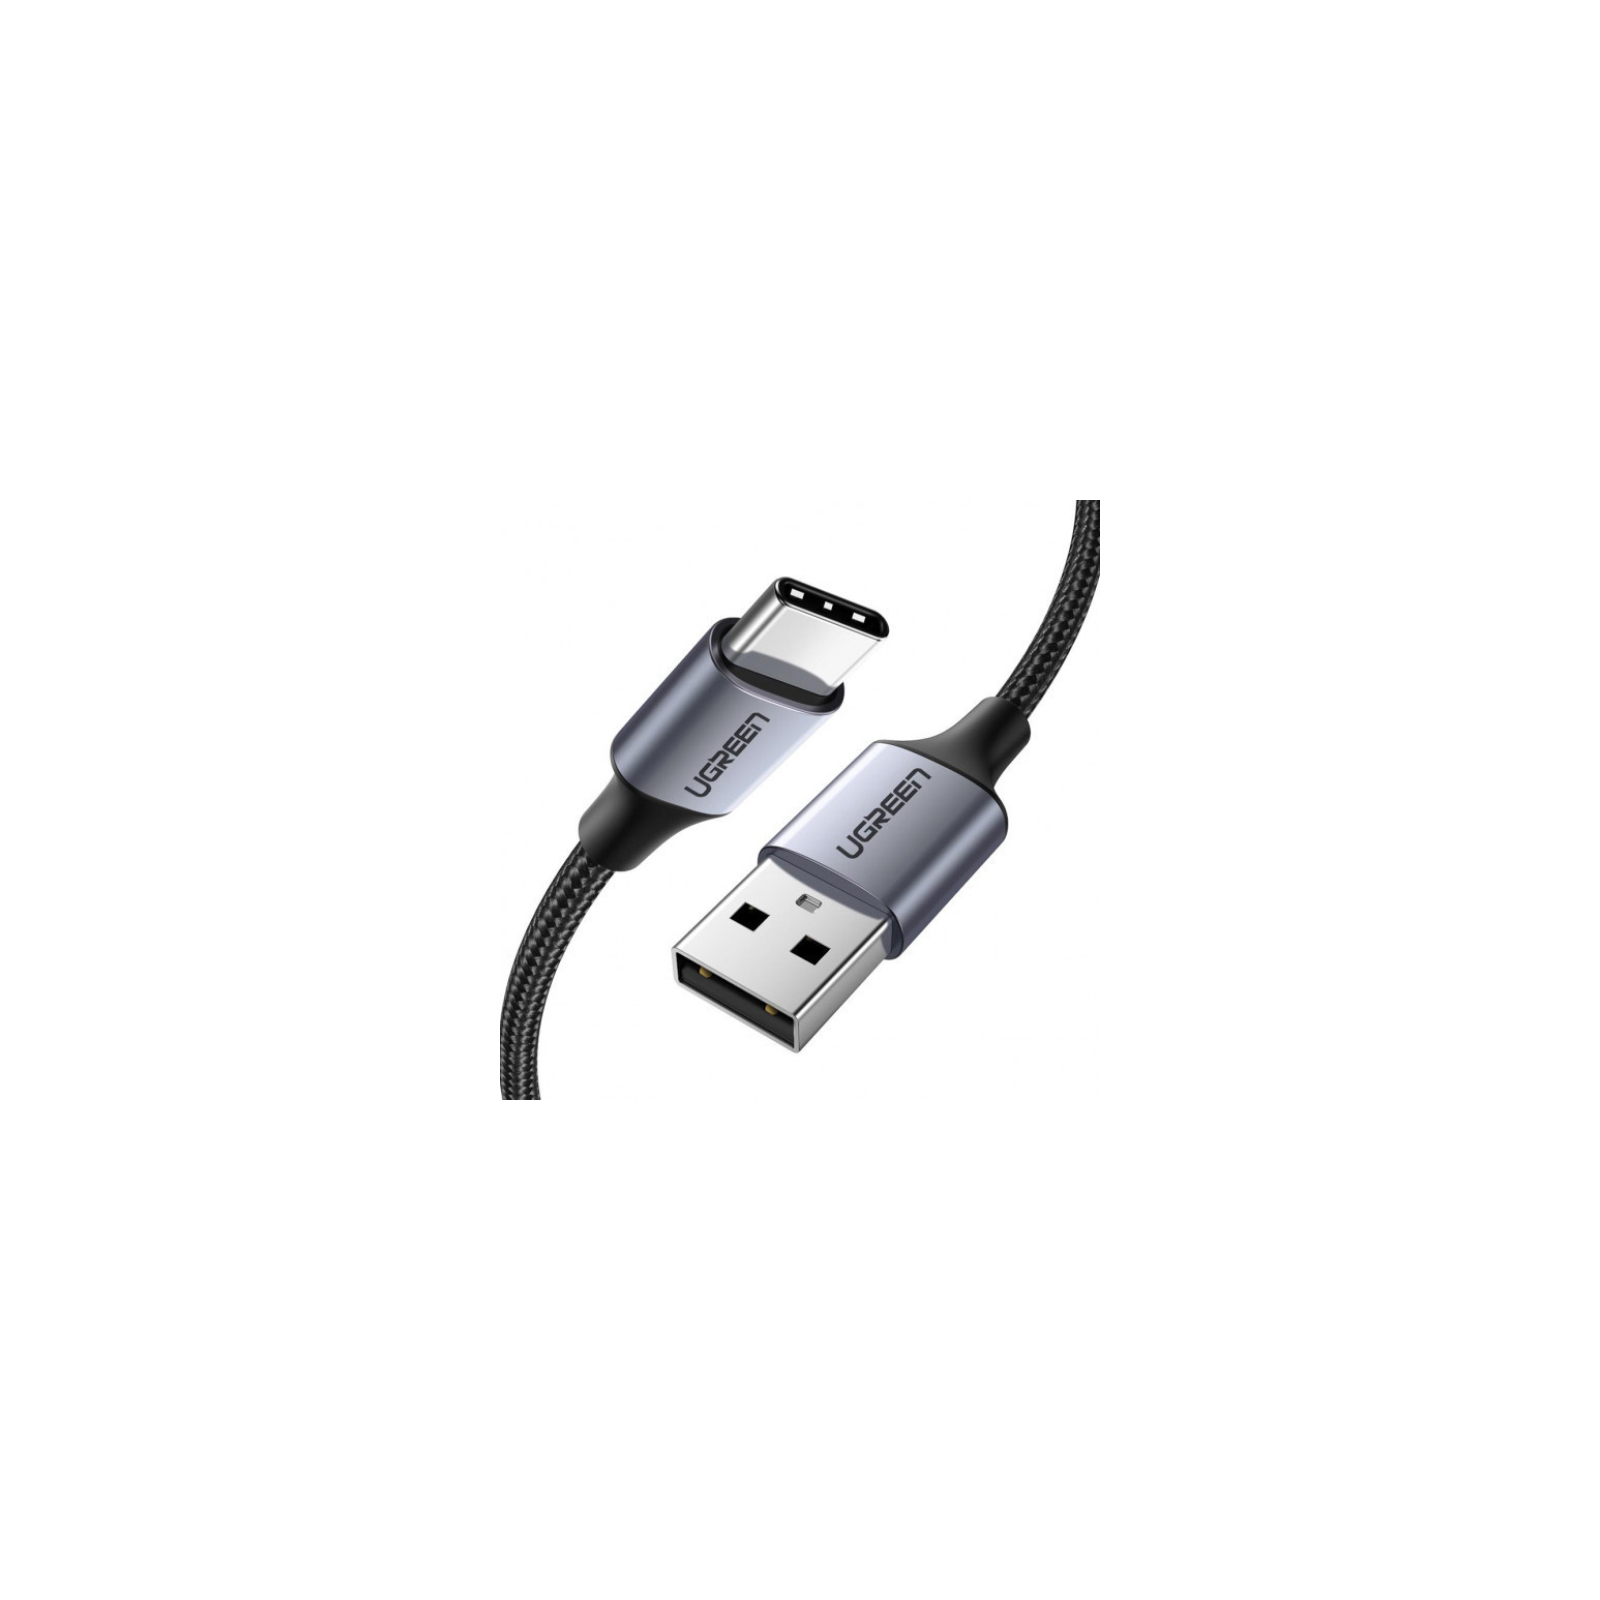 Дата кабель USB 2.0 AM to Type-C 3.0m 3.0A 18W US288 Space Gray Ugreen (60408) изображение 2